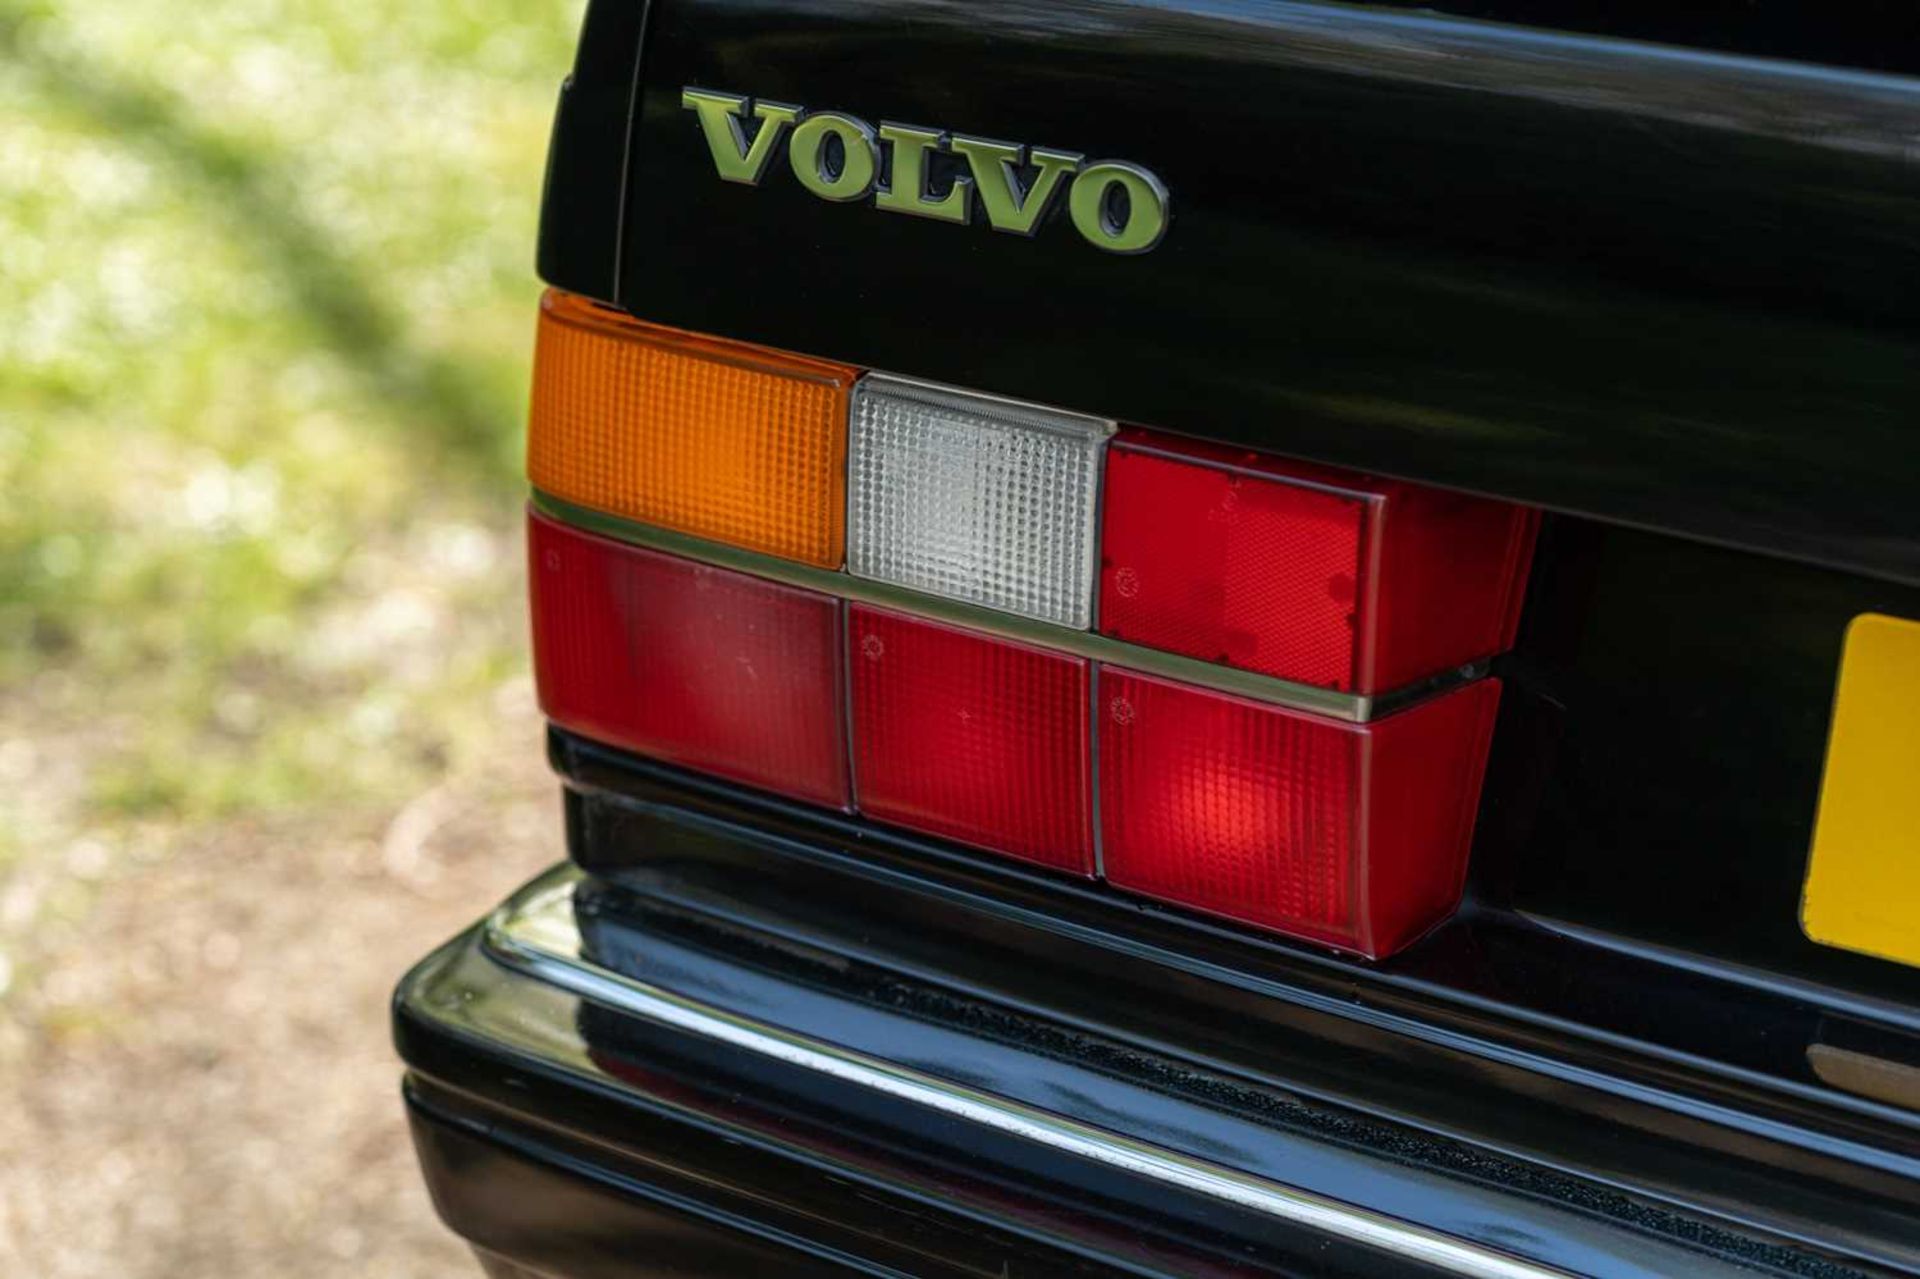 1987 Volvo 760 Turbo Intercooler Saloon Rare factory Manual *** NO RESERVE *** - Image 39 of 61